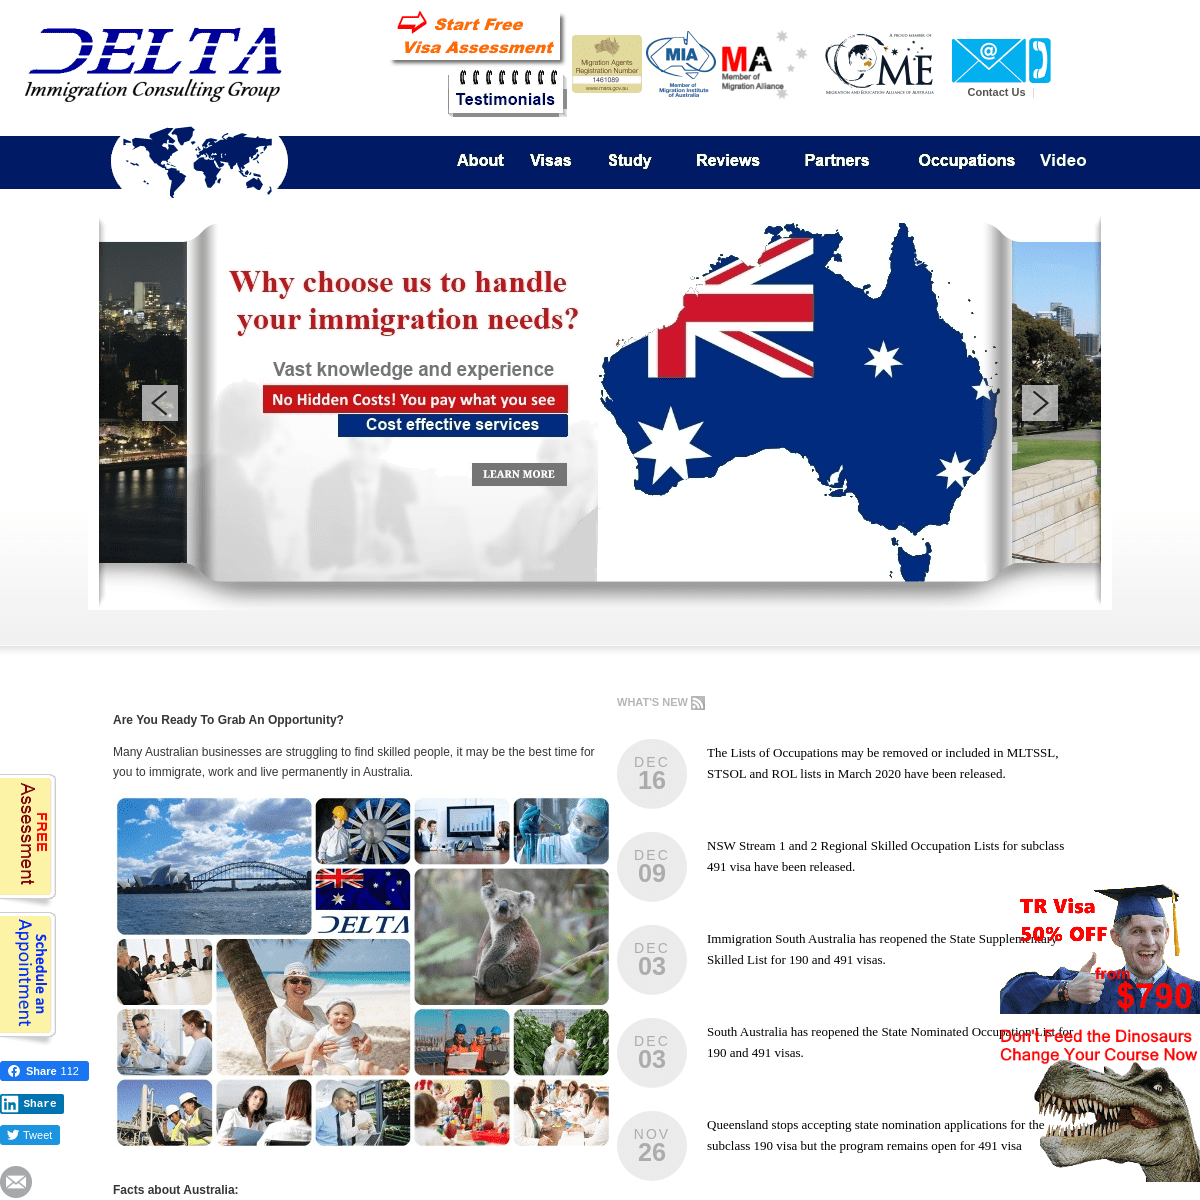 A complete backup of deltaimmigration.com.au